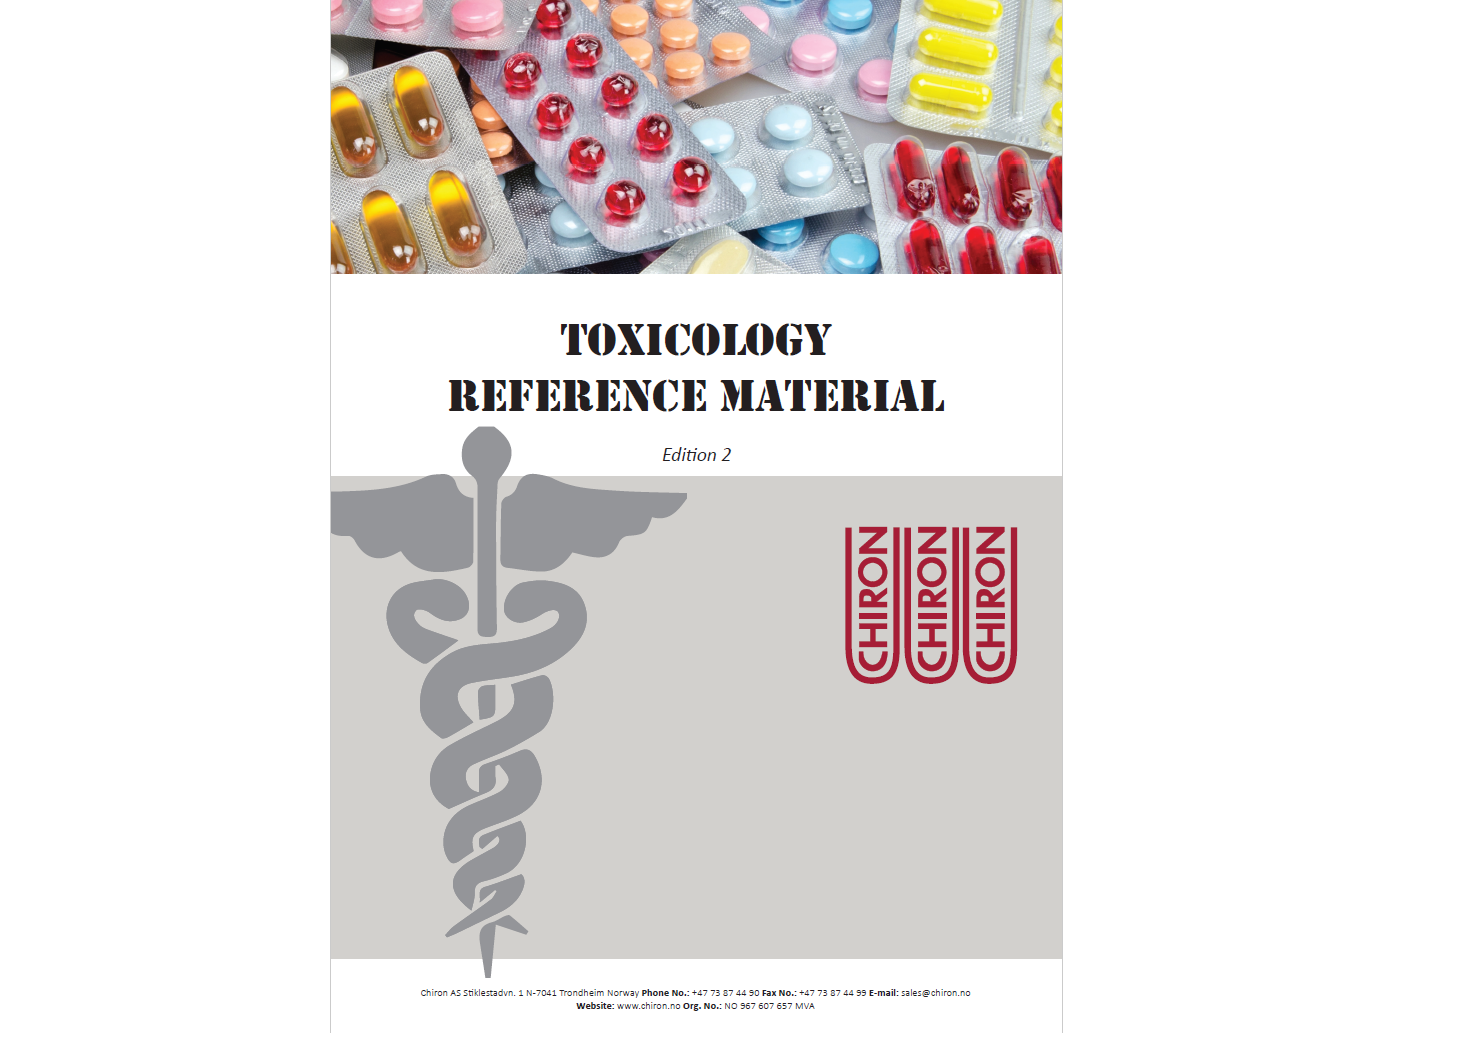 Toxicology catalogue, edition 2